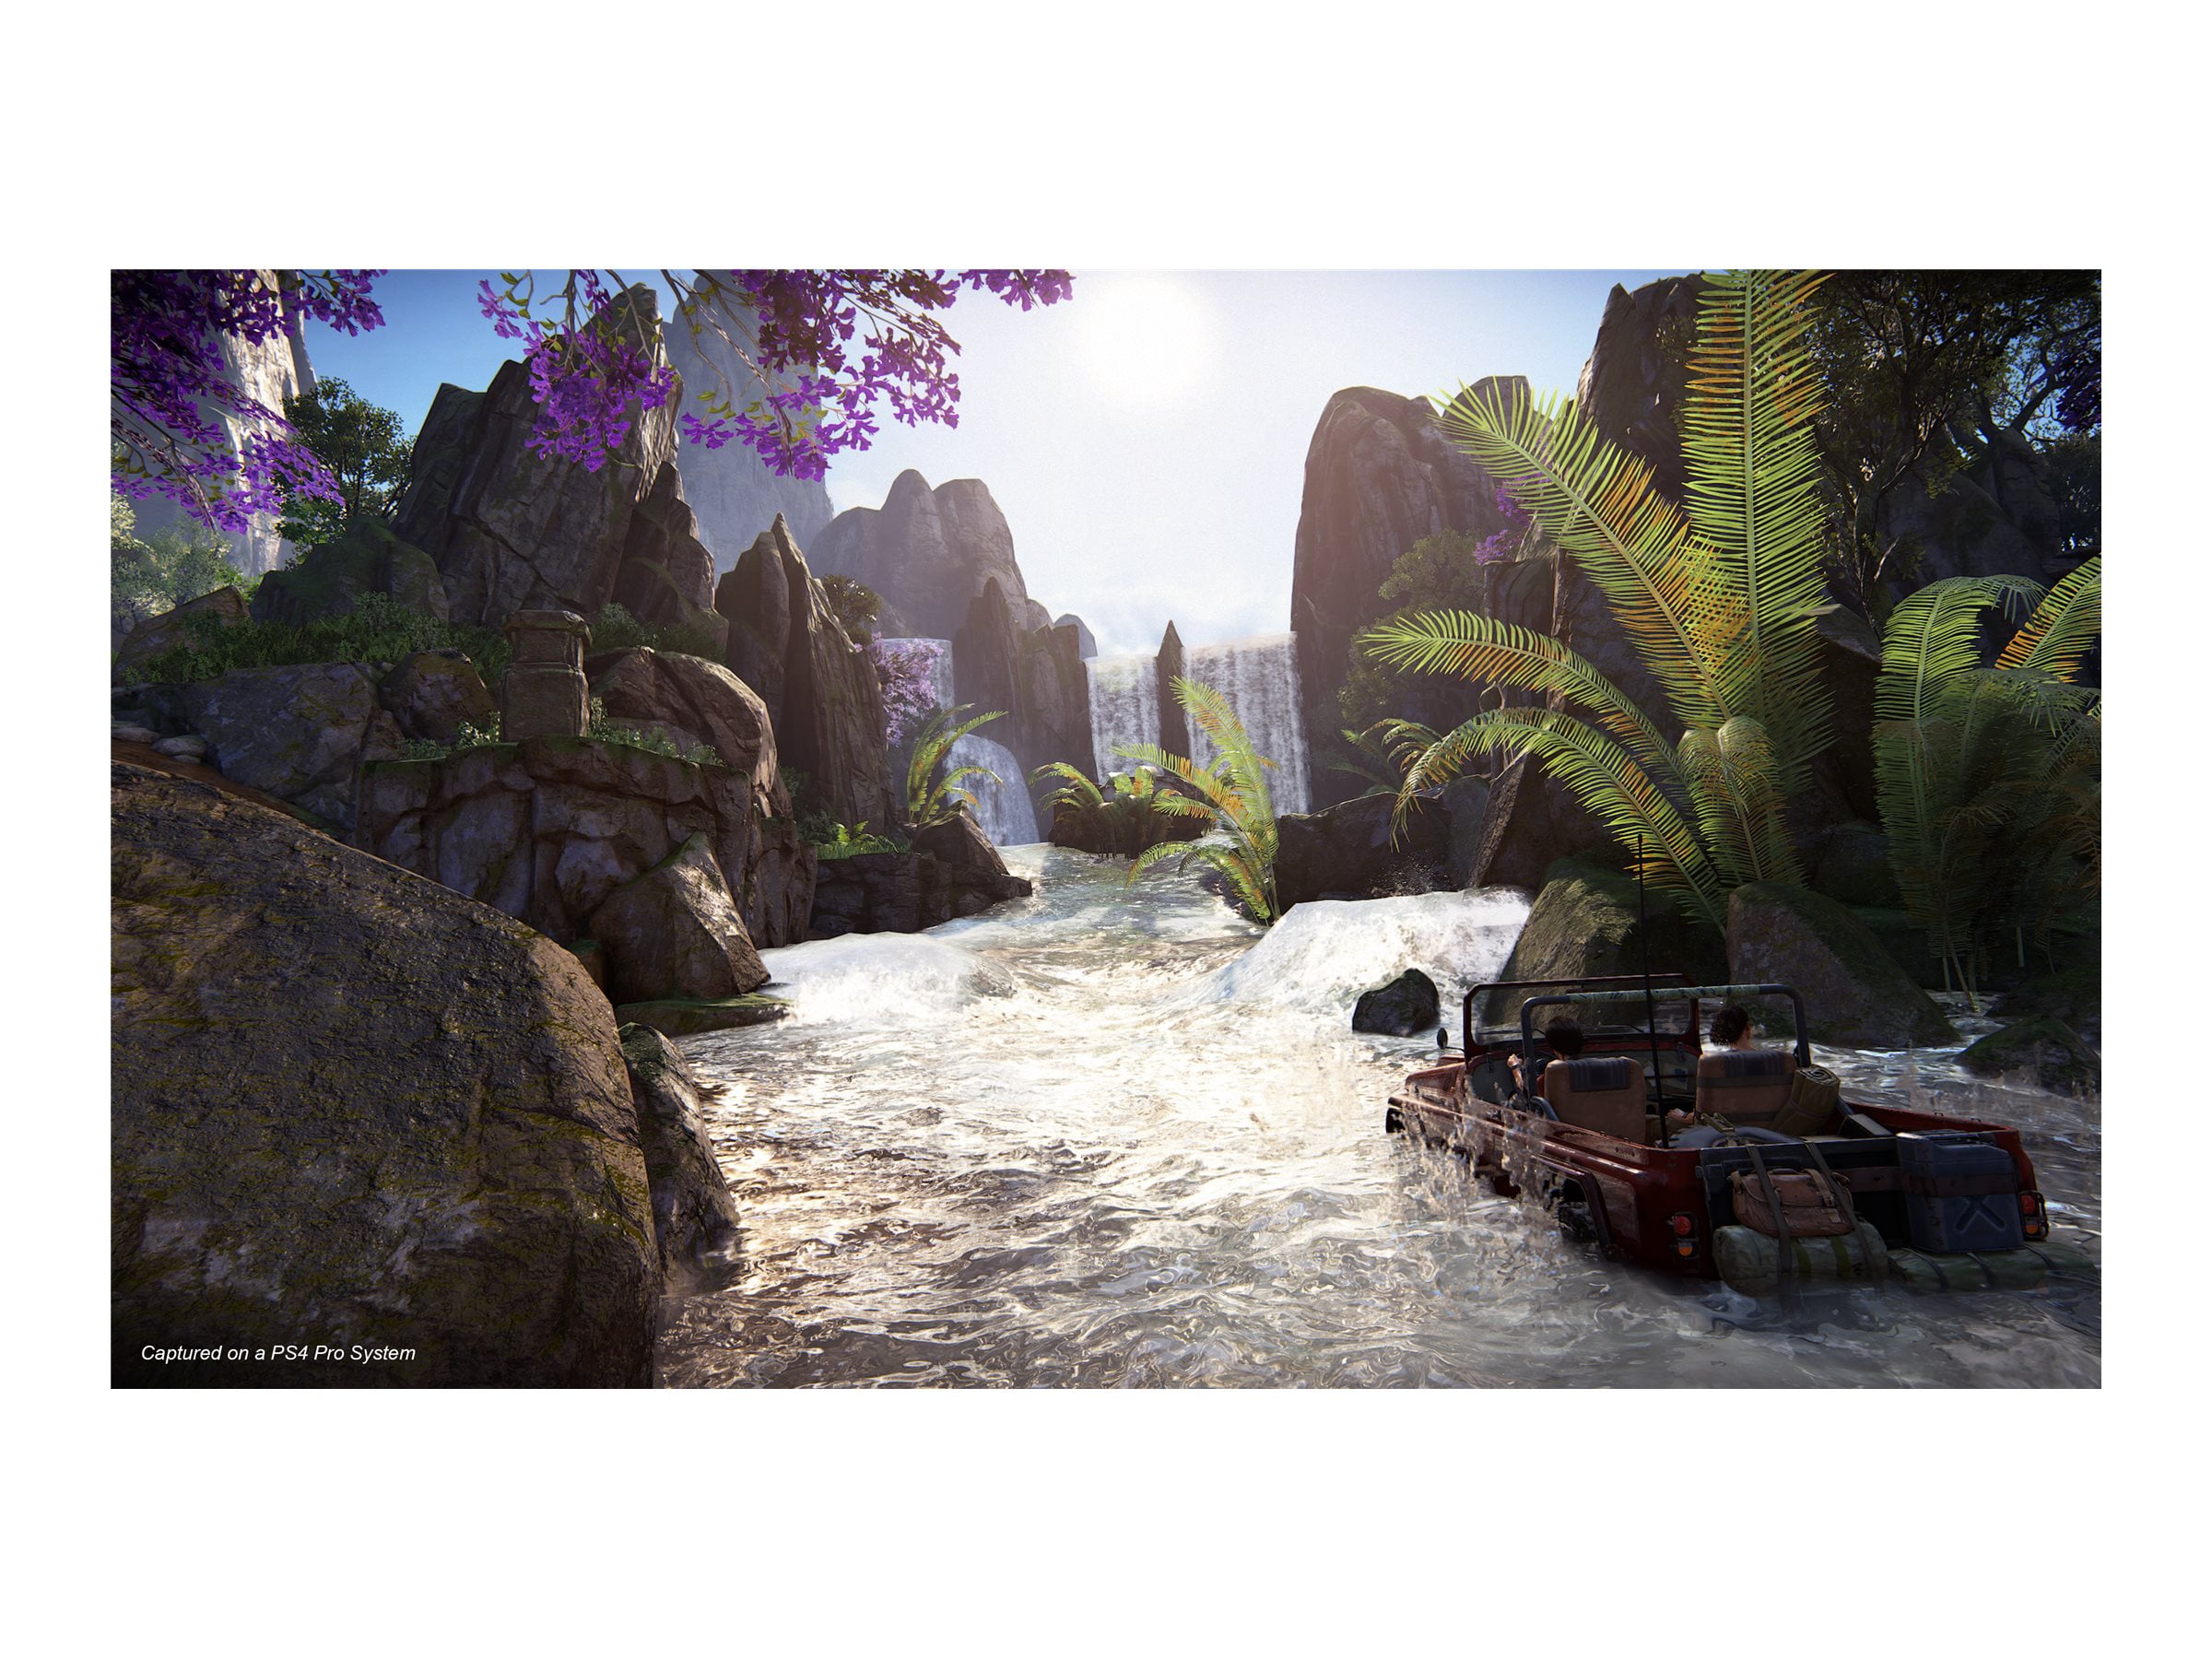 Uncharted 3 Nathan Drake's Deception Collector's Edition - Ps3 (Com  Detalhe) - Arena Games - Loja Geek